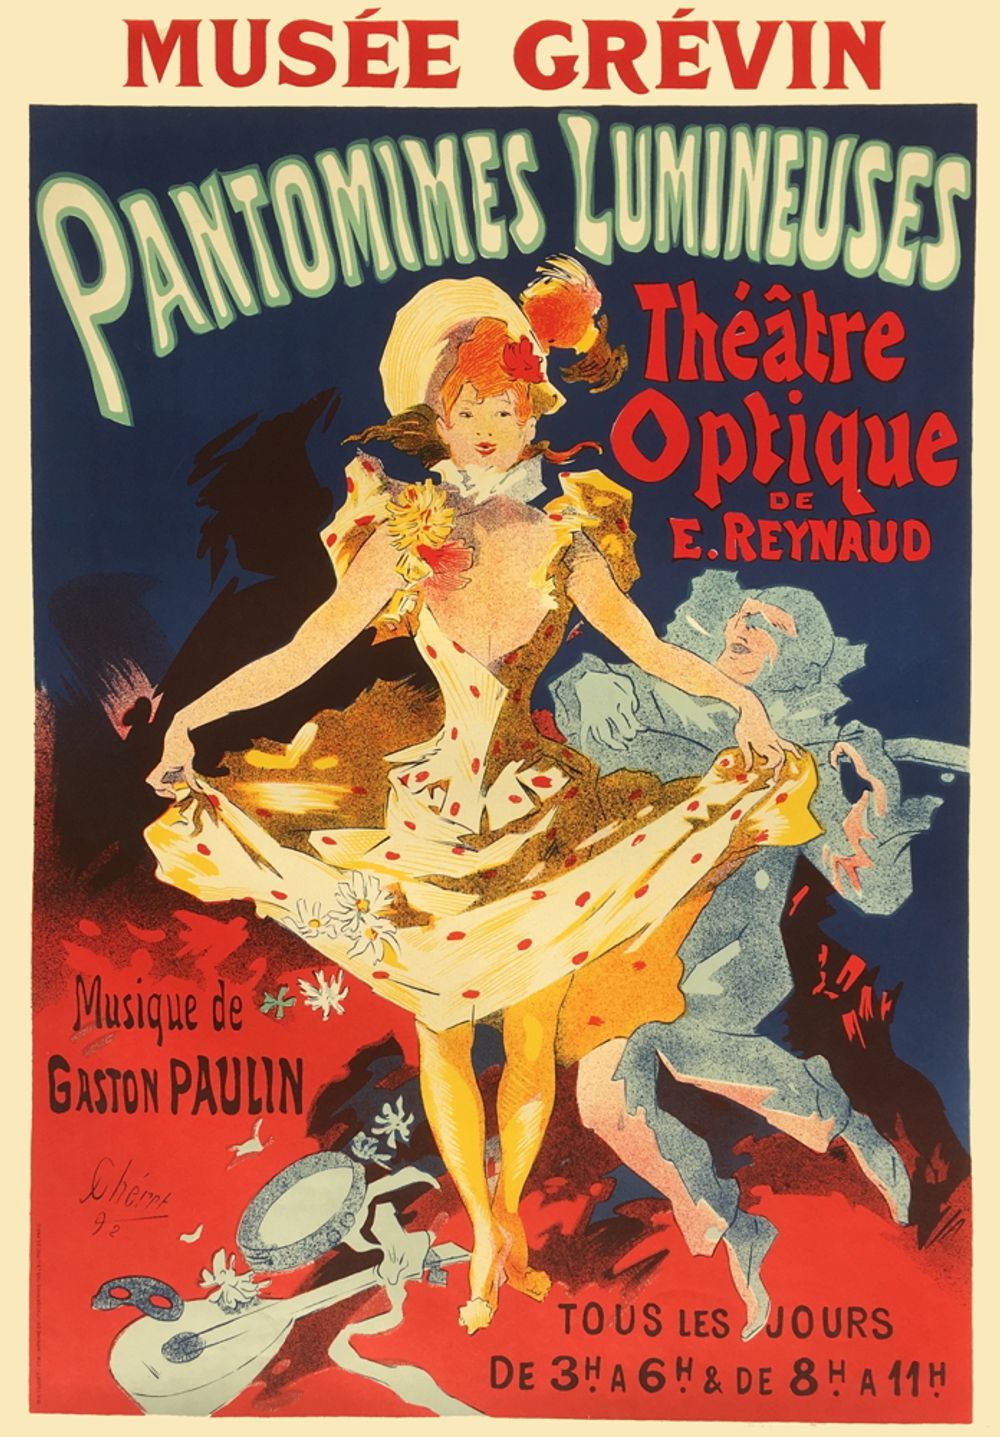 Musée Grévin - pantomimes lumineuses